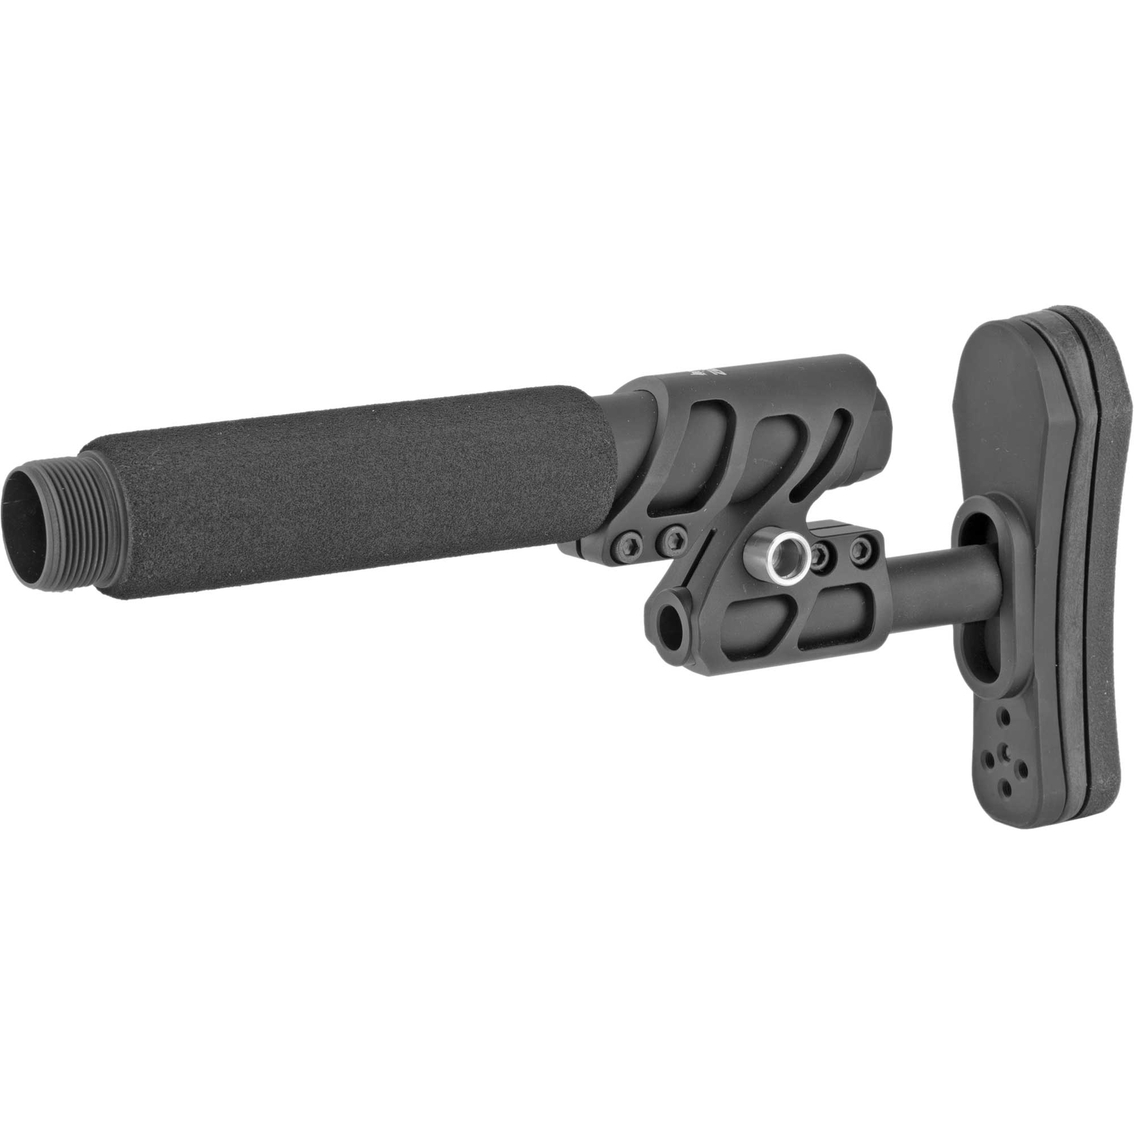 Odin Works Zulu 2.0 Adjustable Stock Kit Fits AR-15 Rifle Black - Image 3 of 3